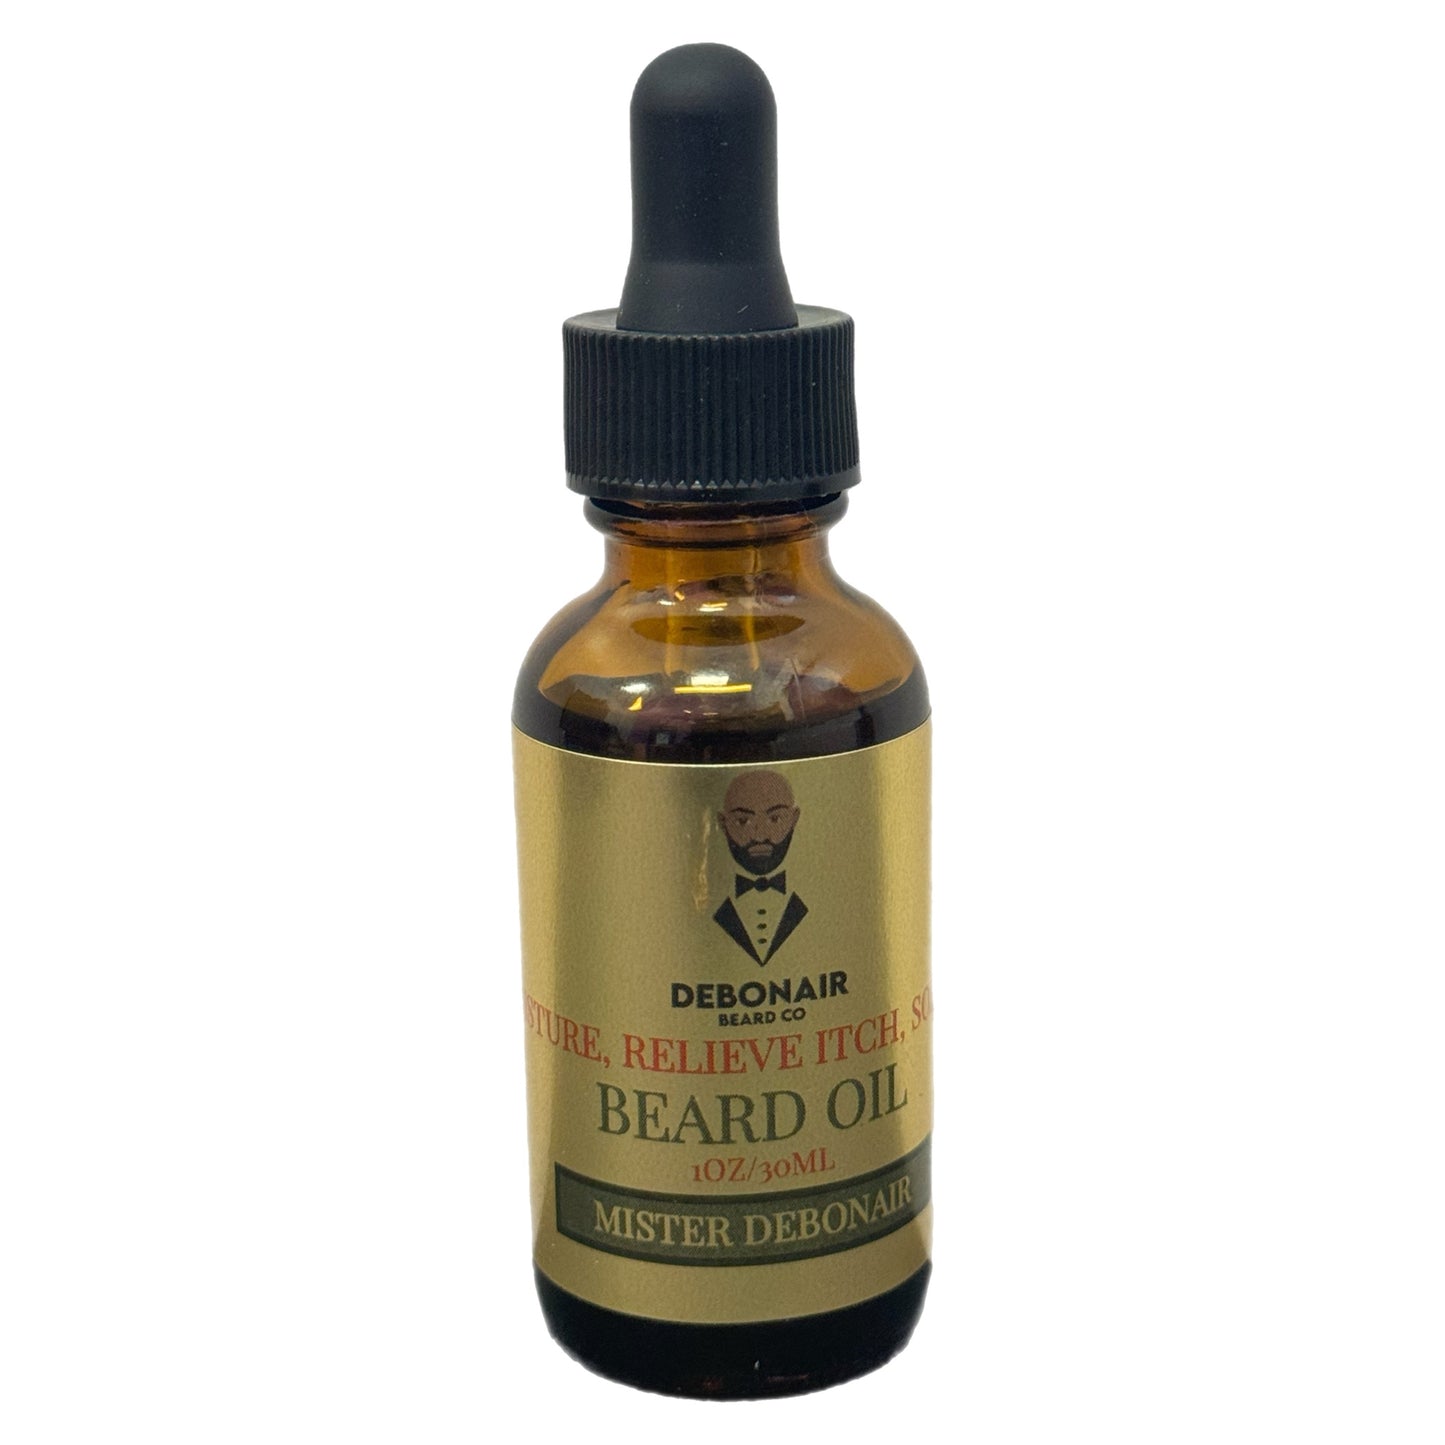 Beard Oil (Mister Debonair)